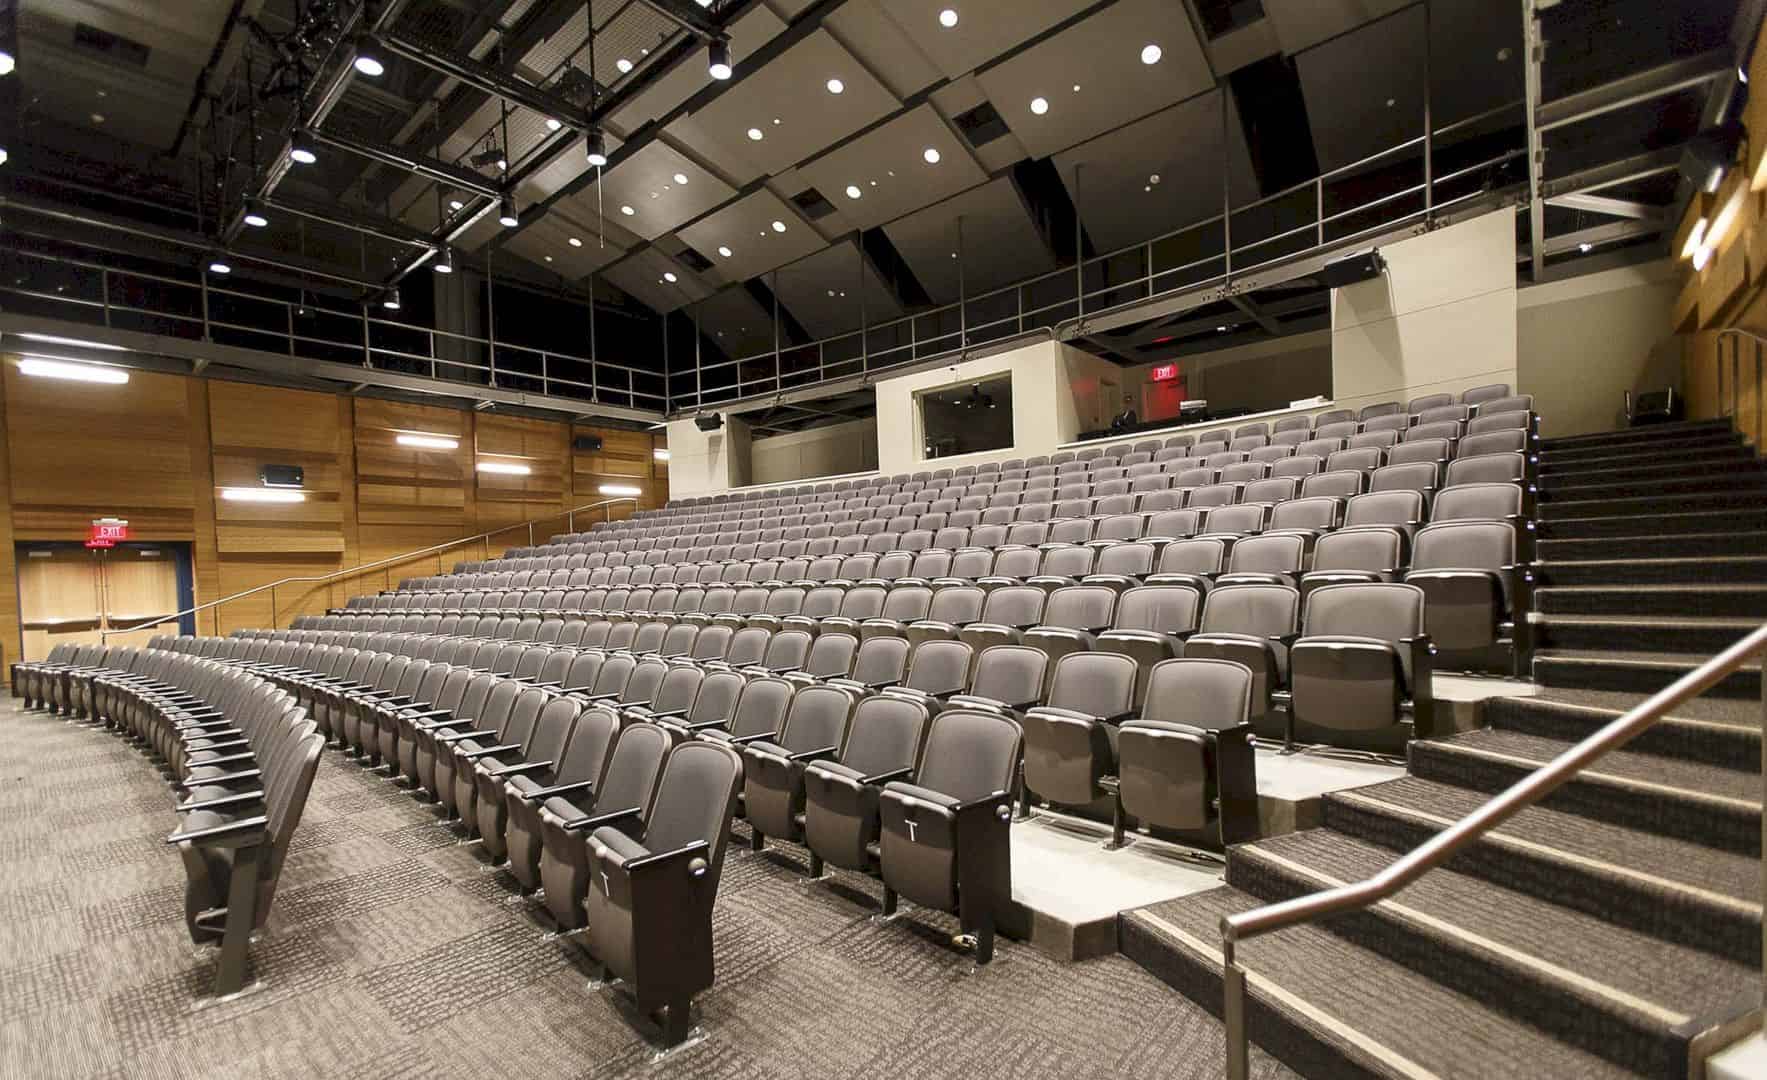 Corona Del Mar High School Performing Arts Center An Arts Center With Career Building Environment 2